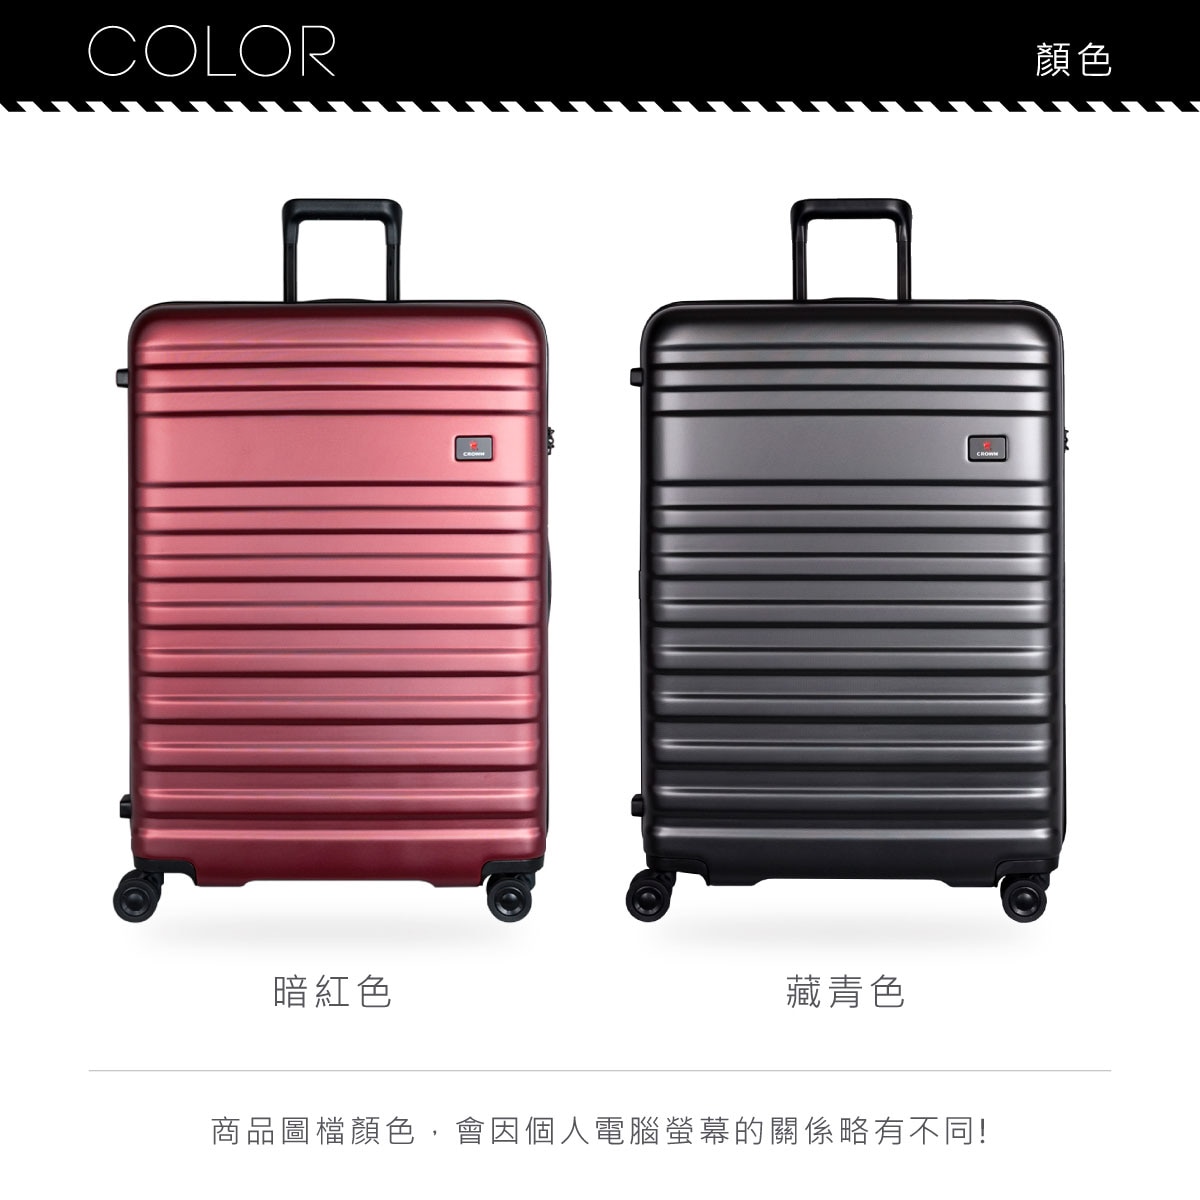 CROWN 26+29 吋行李箱有暗紅、藏青兩色。